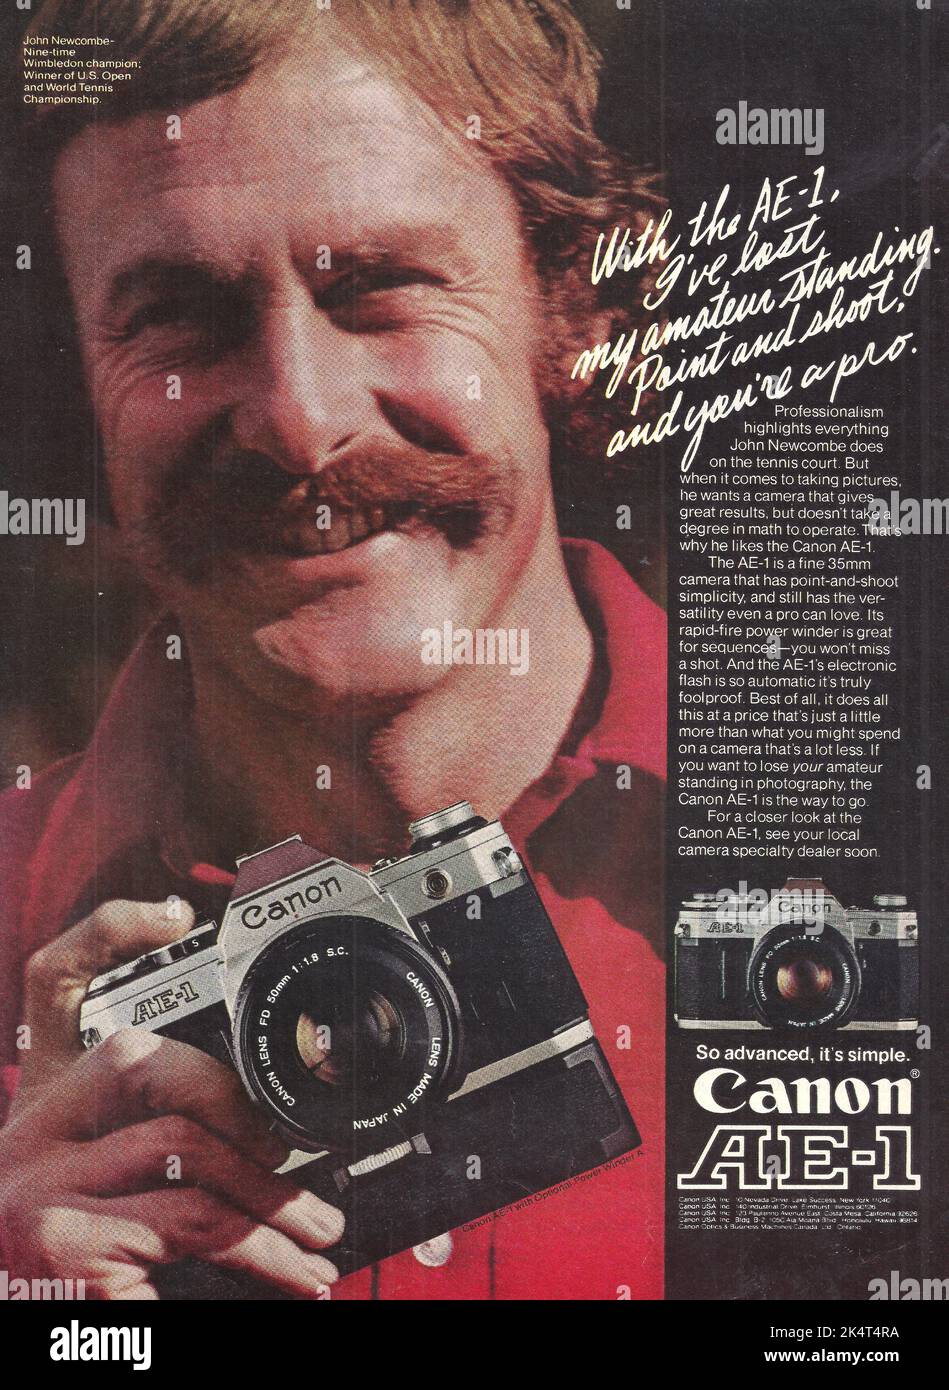 Canon AE 1 AE1 camera old vintage advertisement of Canon cameras photo  analog canon camera Stock Photo